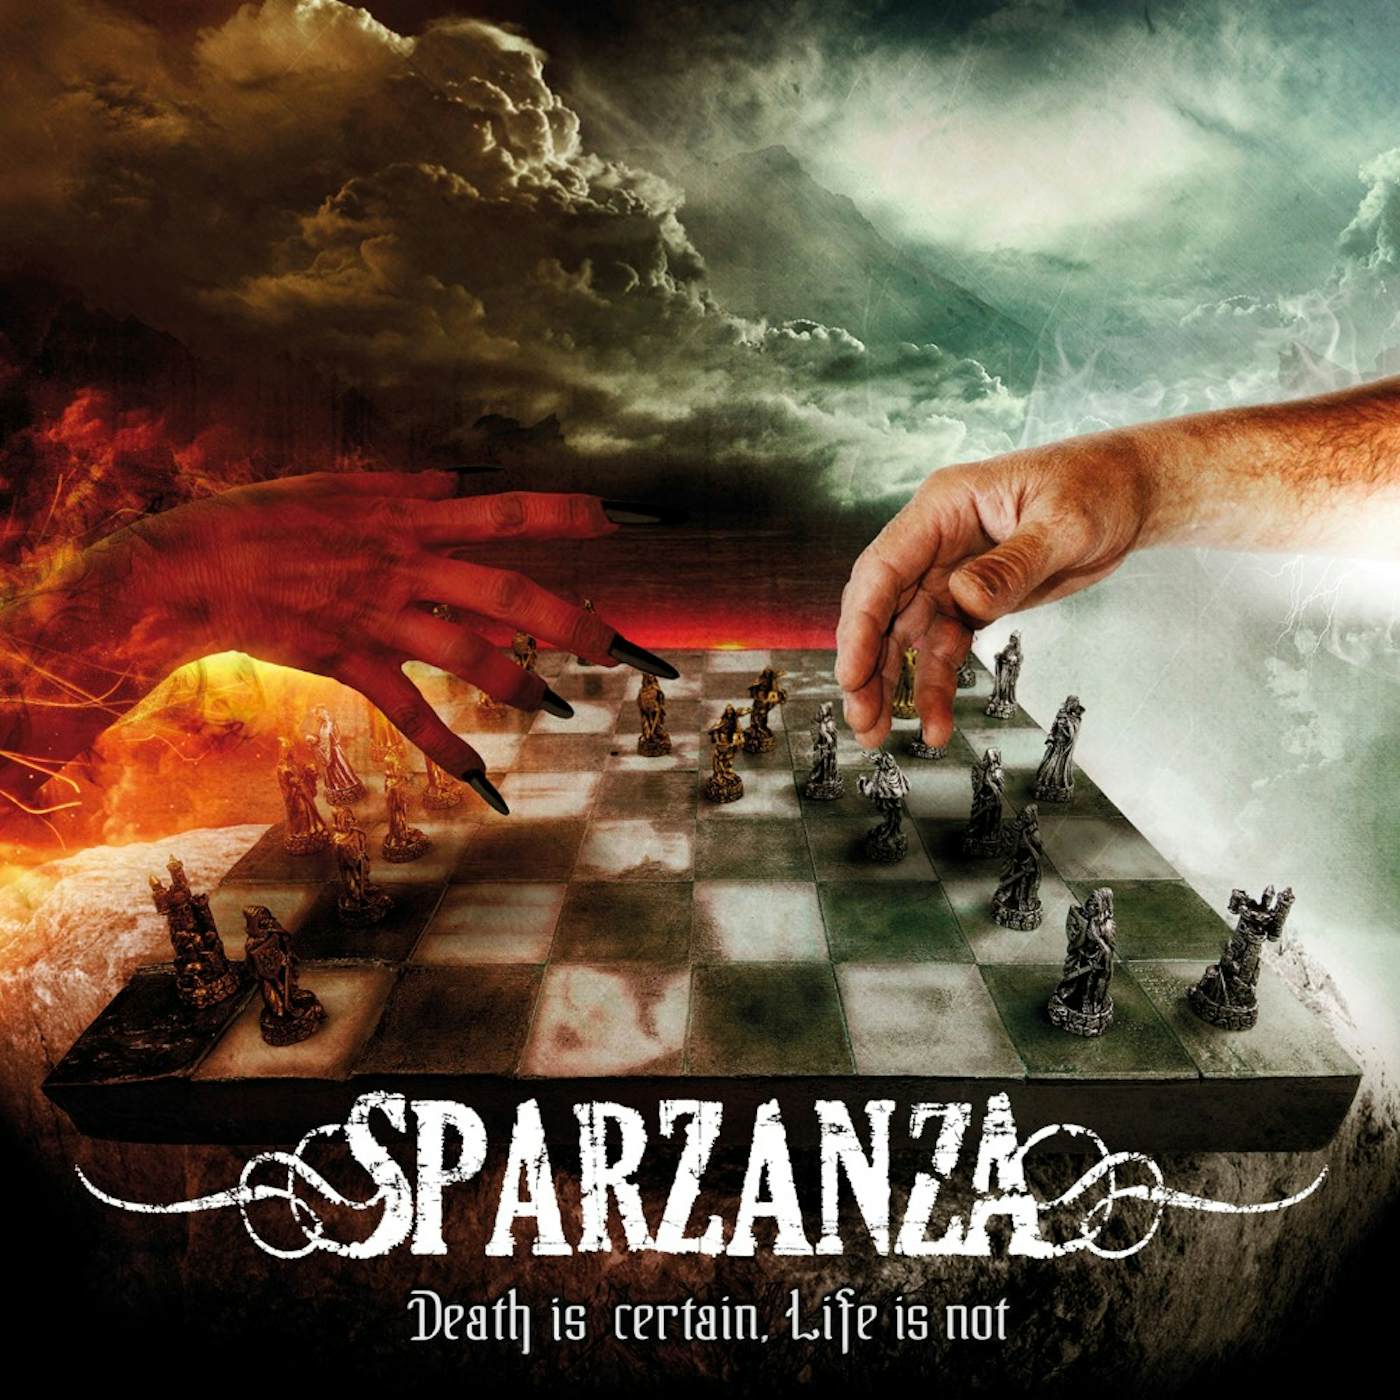 Sparzanza Death Is Certain Life Is Not Vinyl Record